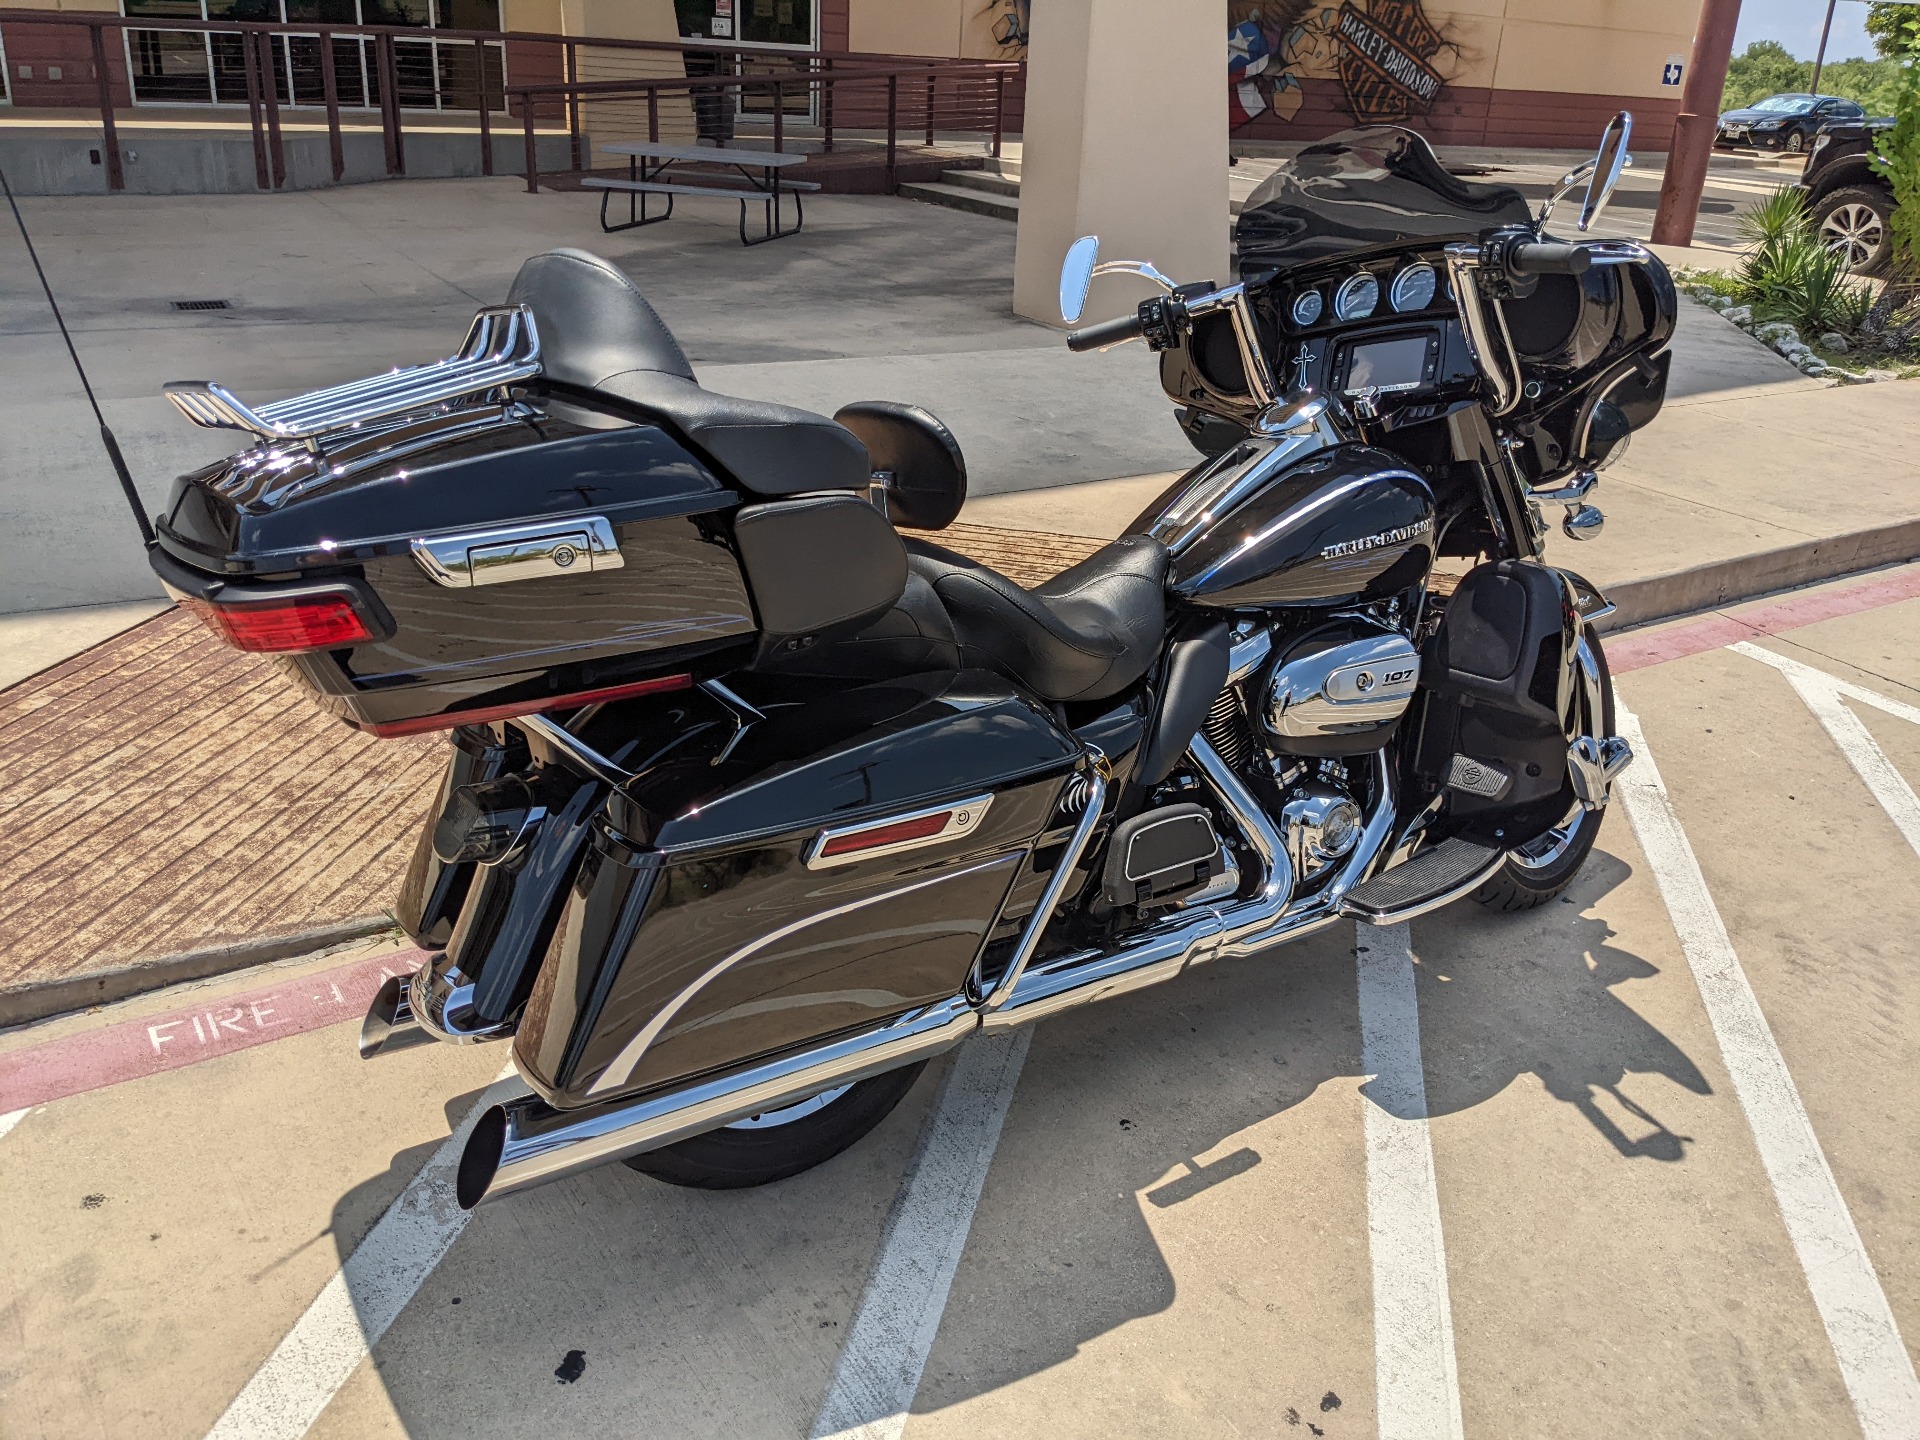 2018 Harley-Davidson Ultra Limited in San Antonio, Texas - Photo 8